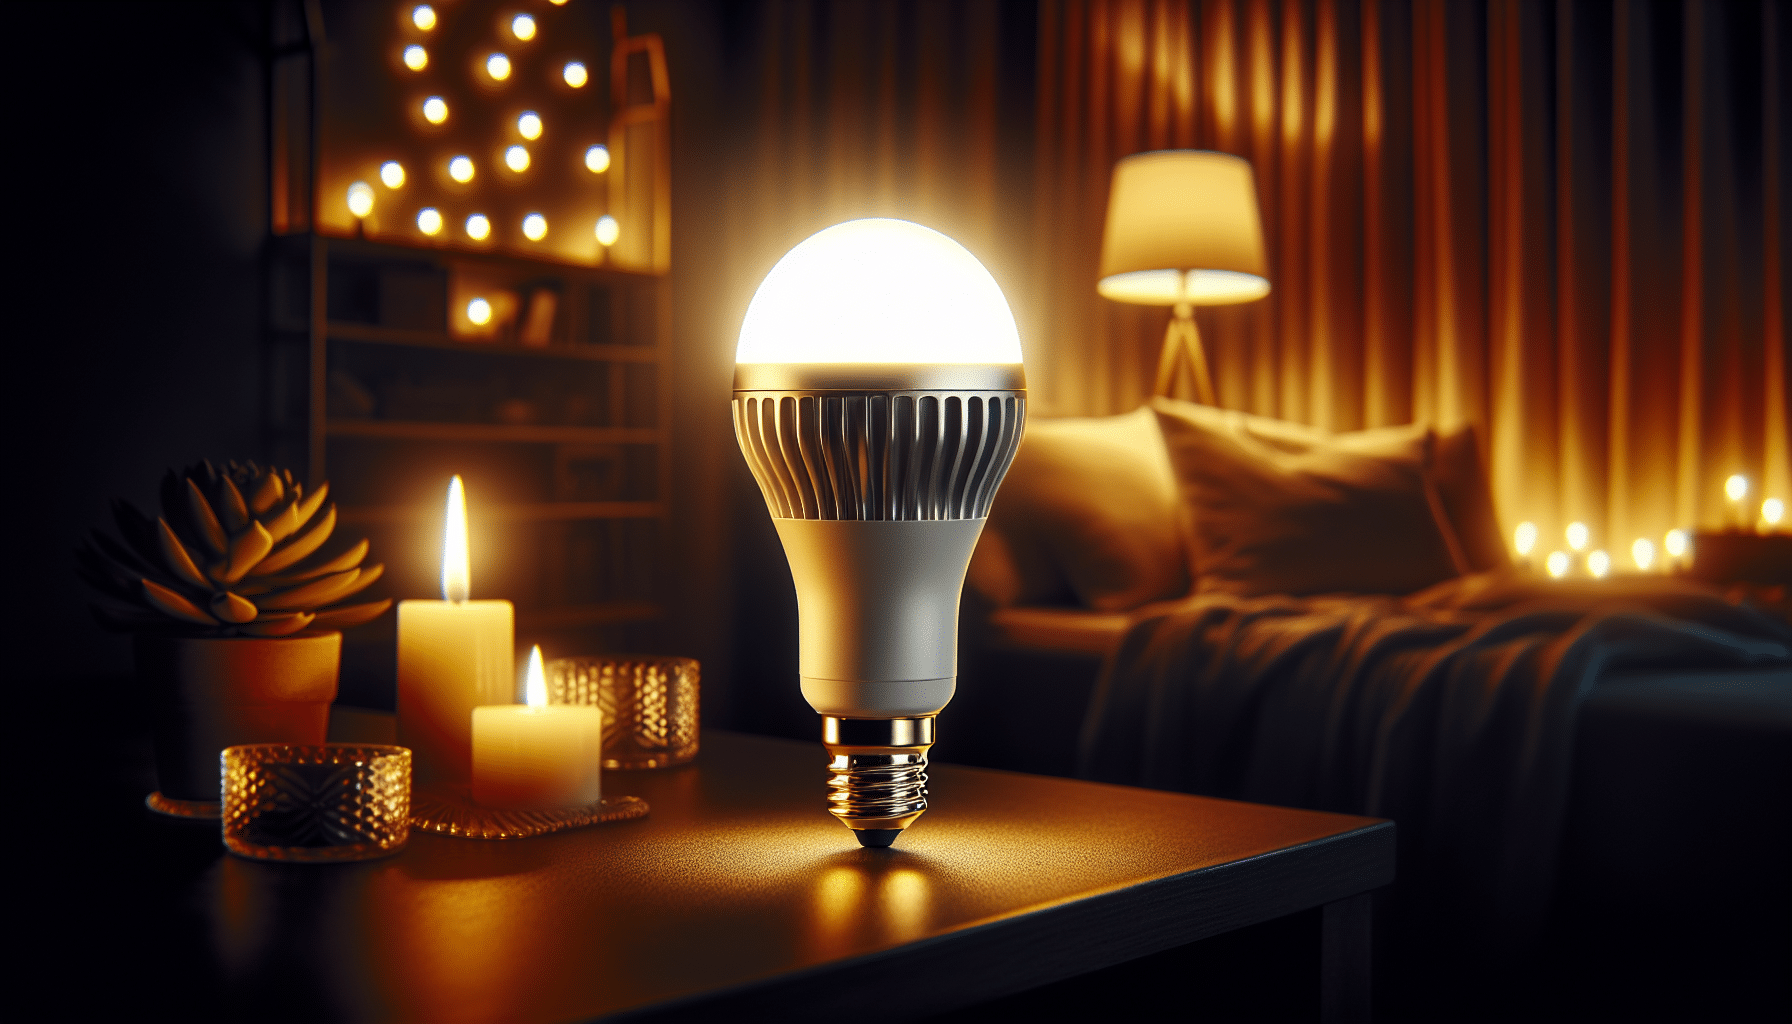 LUMIMAN Candelabra Smart Bulb E12 LED Smart Light Bulbs Review